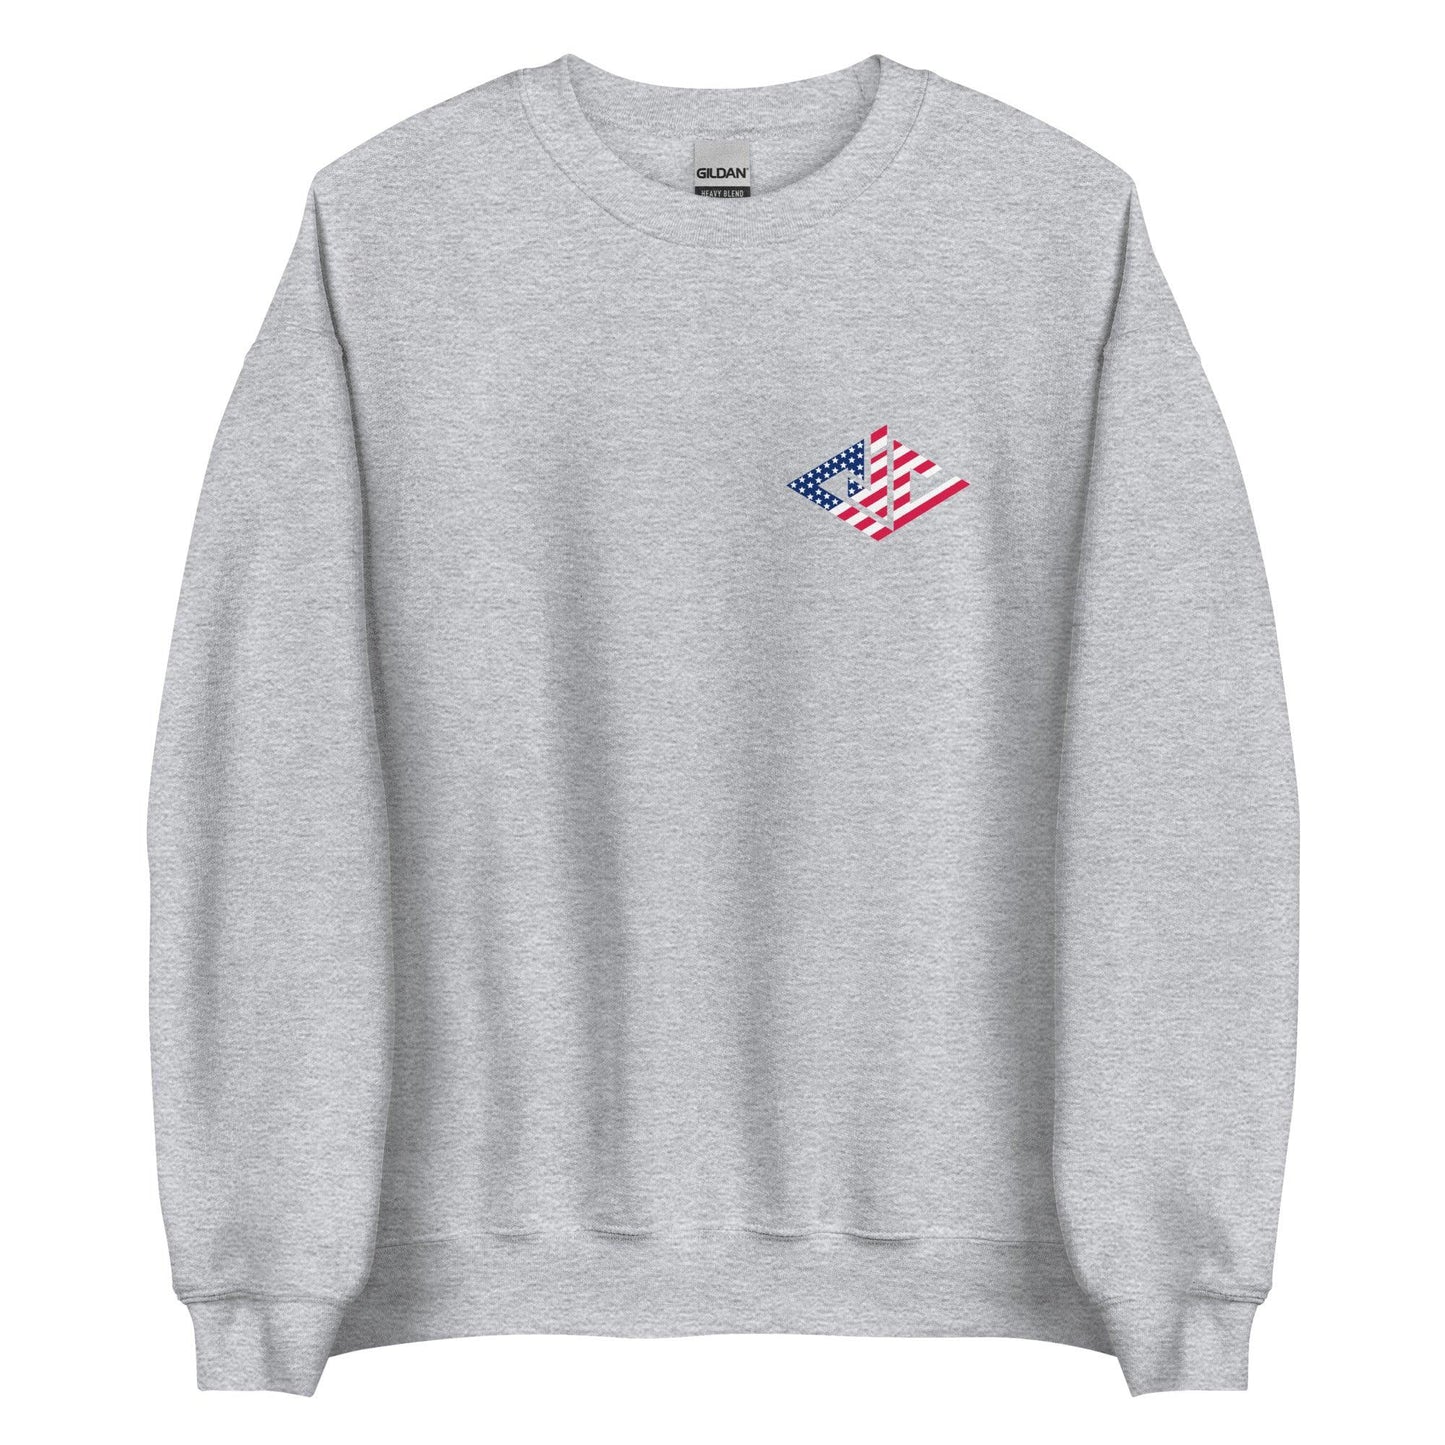 CJ Cummings “Signature” Sweatshirt - Fan Arch